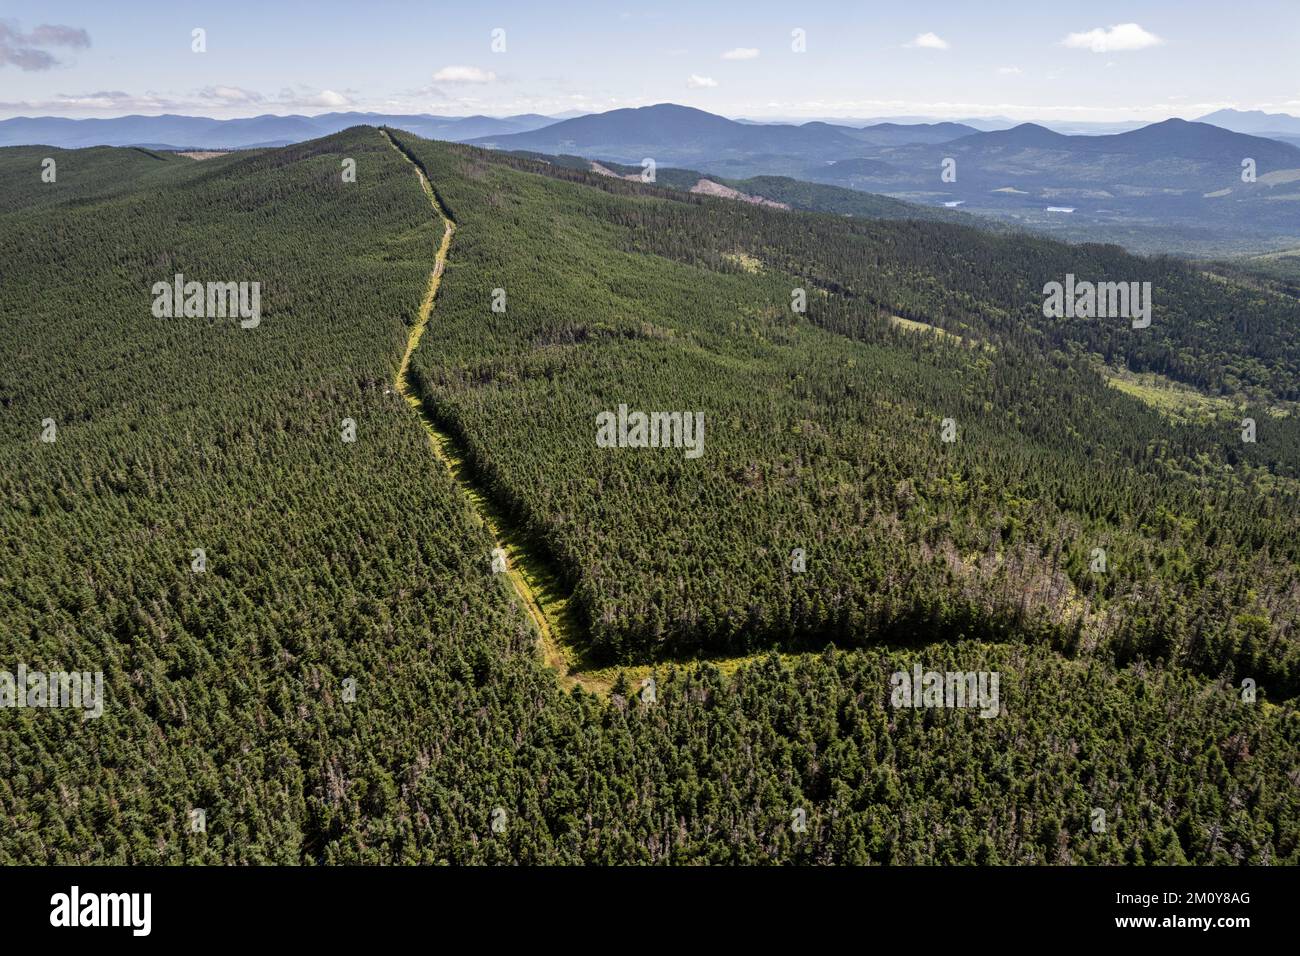 International Border Follows Forest Ridgeline Between Usa And Canada 2M0Y8AG 